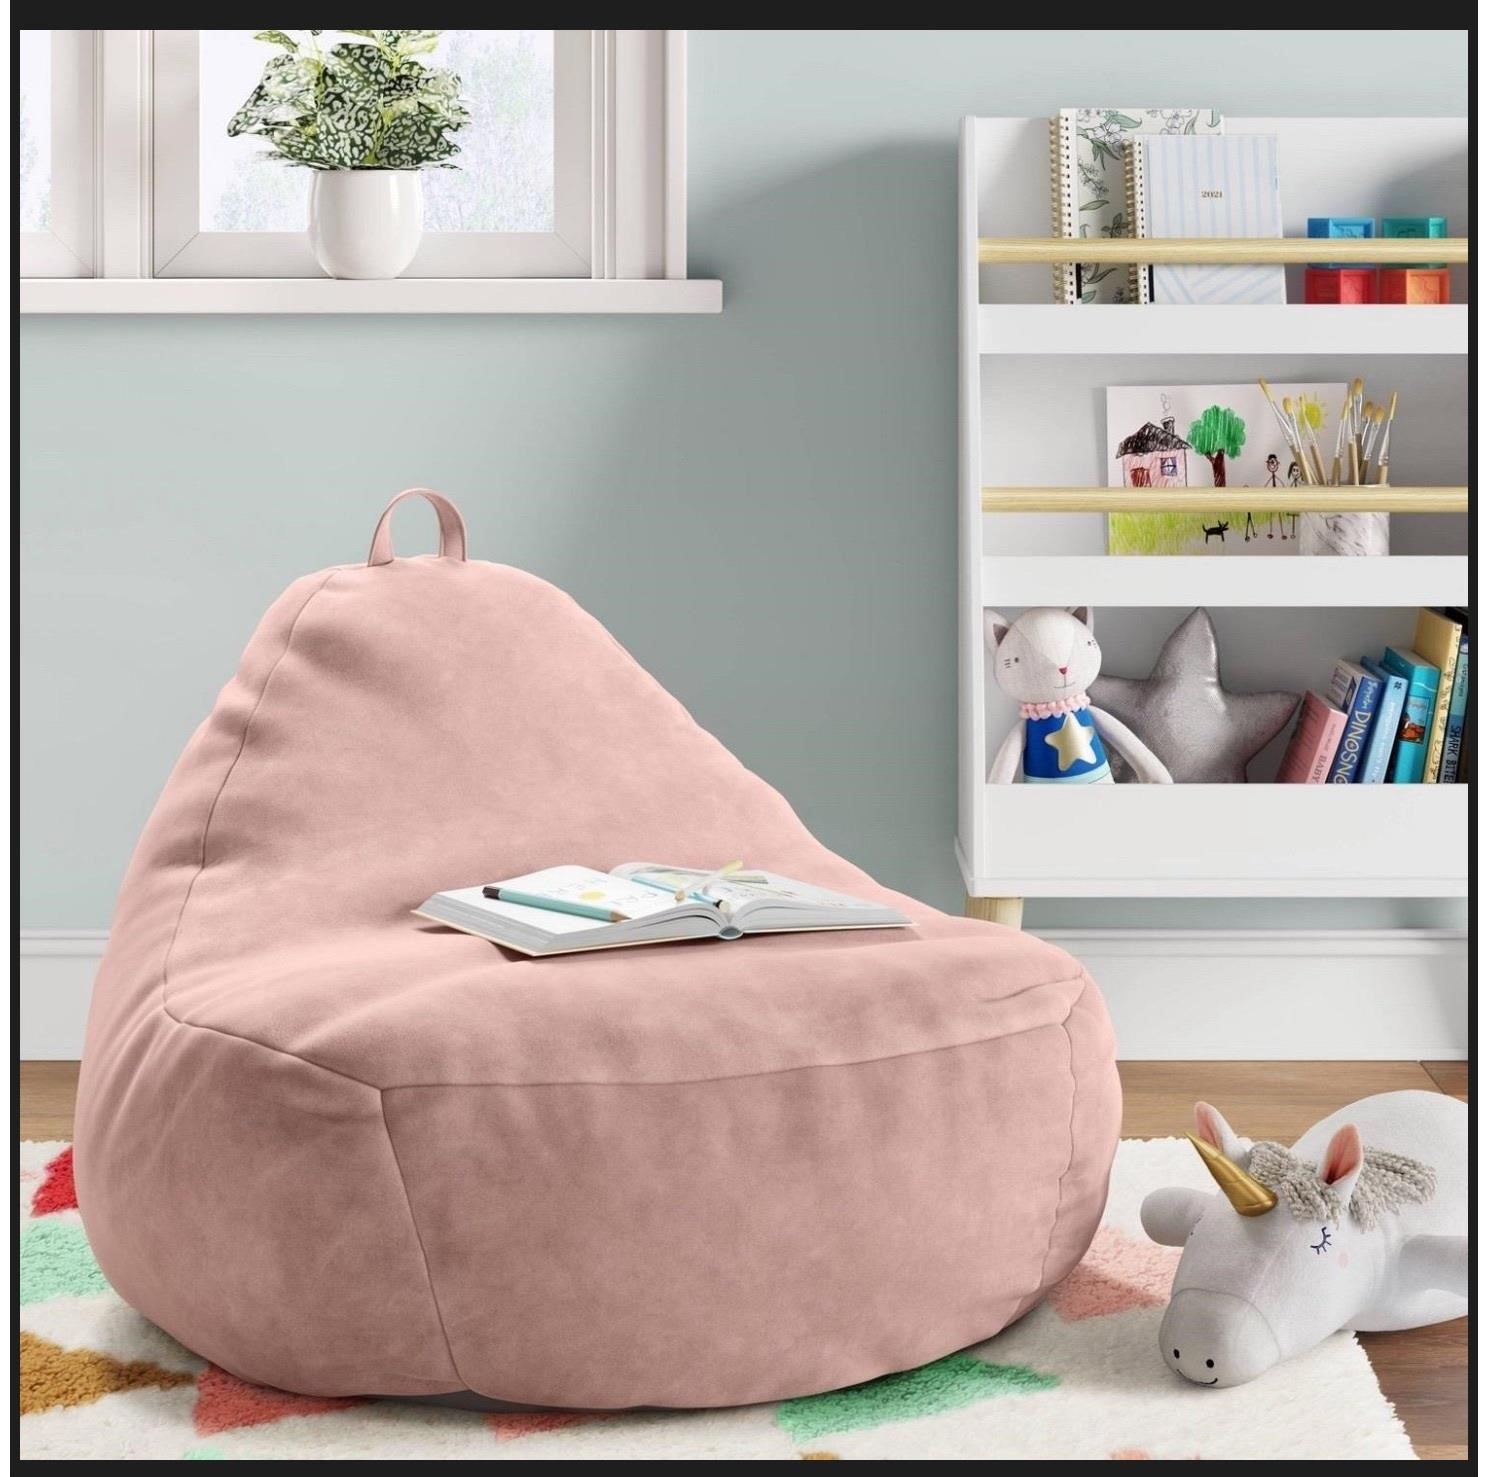 Sensory Friendly Kids' Bean Bag Pink - Pillowfort™